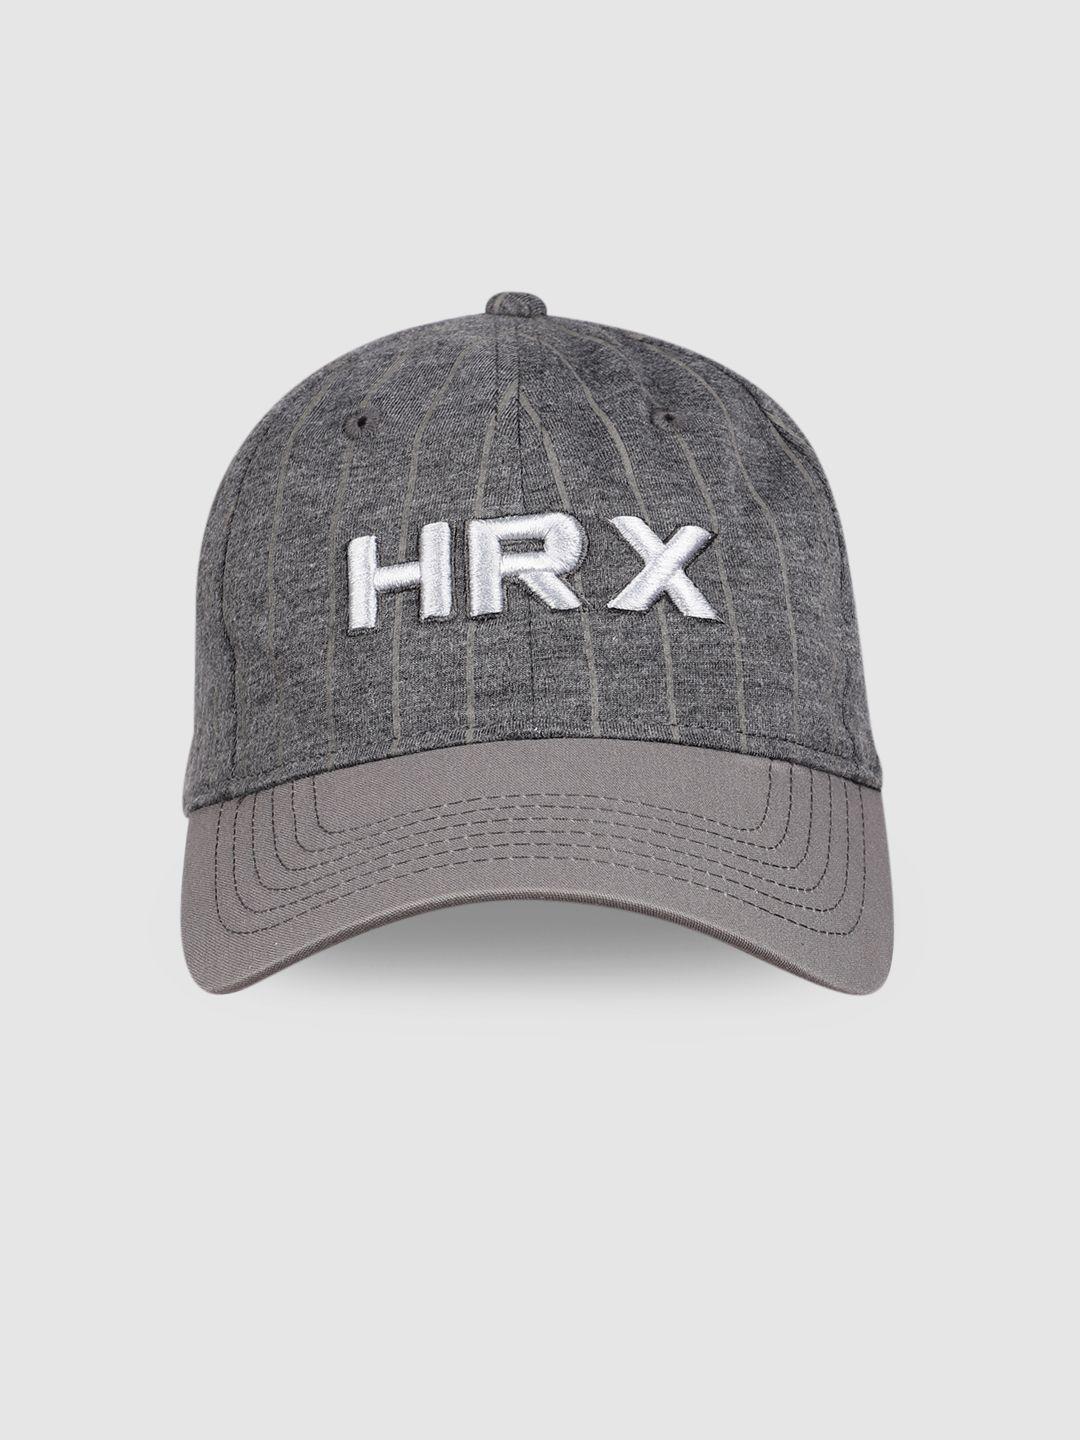 hrx by hrithik roshan unisex dark grey striped baseball cap with embroidered detail